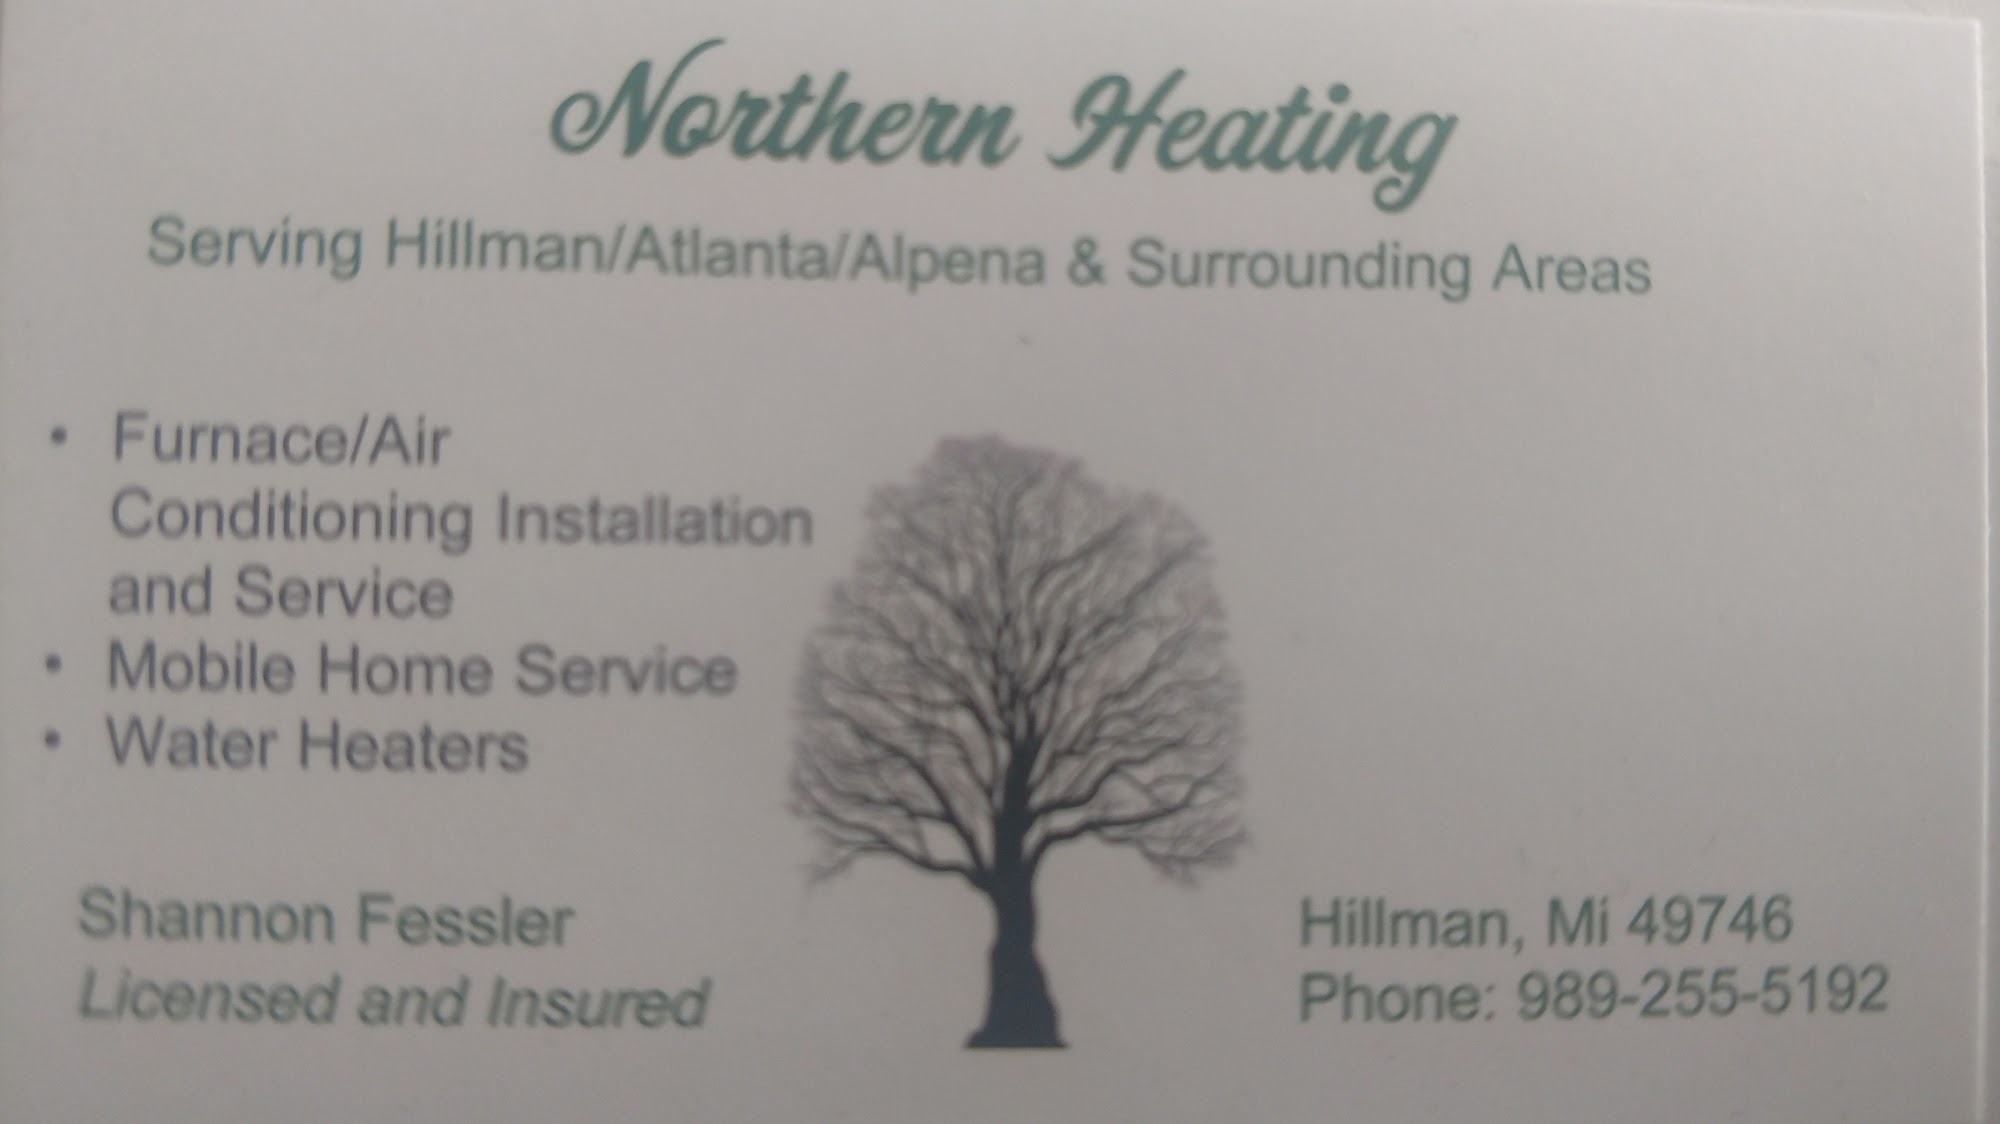 Northern Heating 2400 Paul Rd, Hillman Michigan 49746